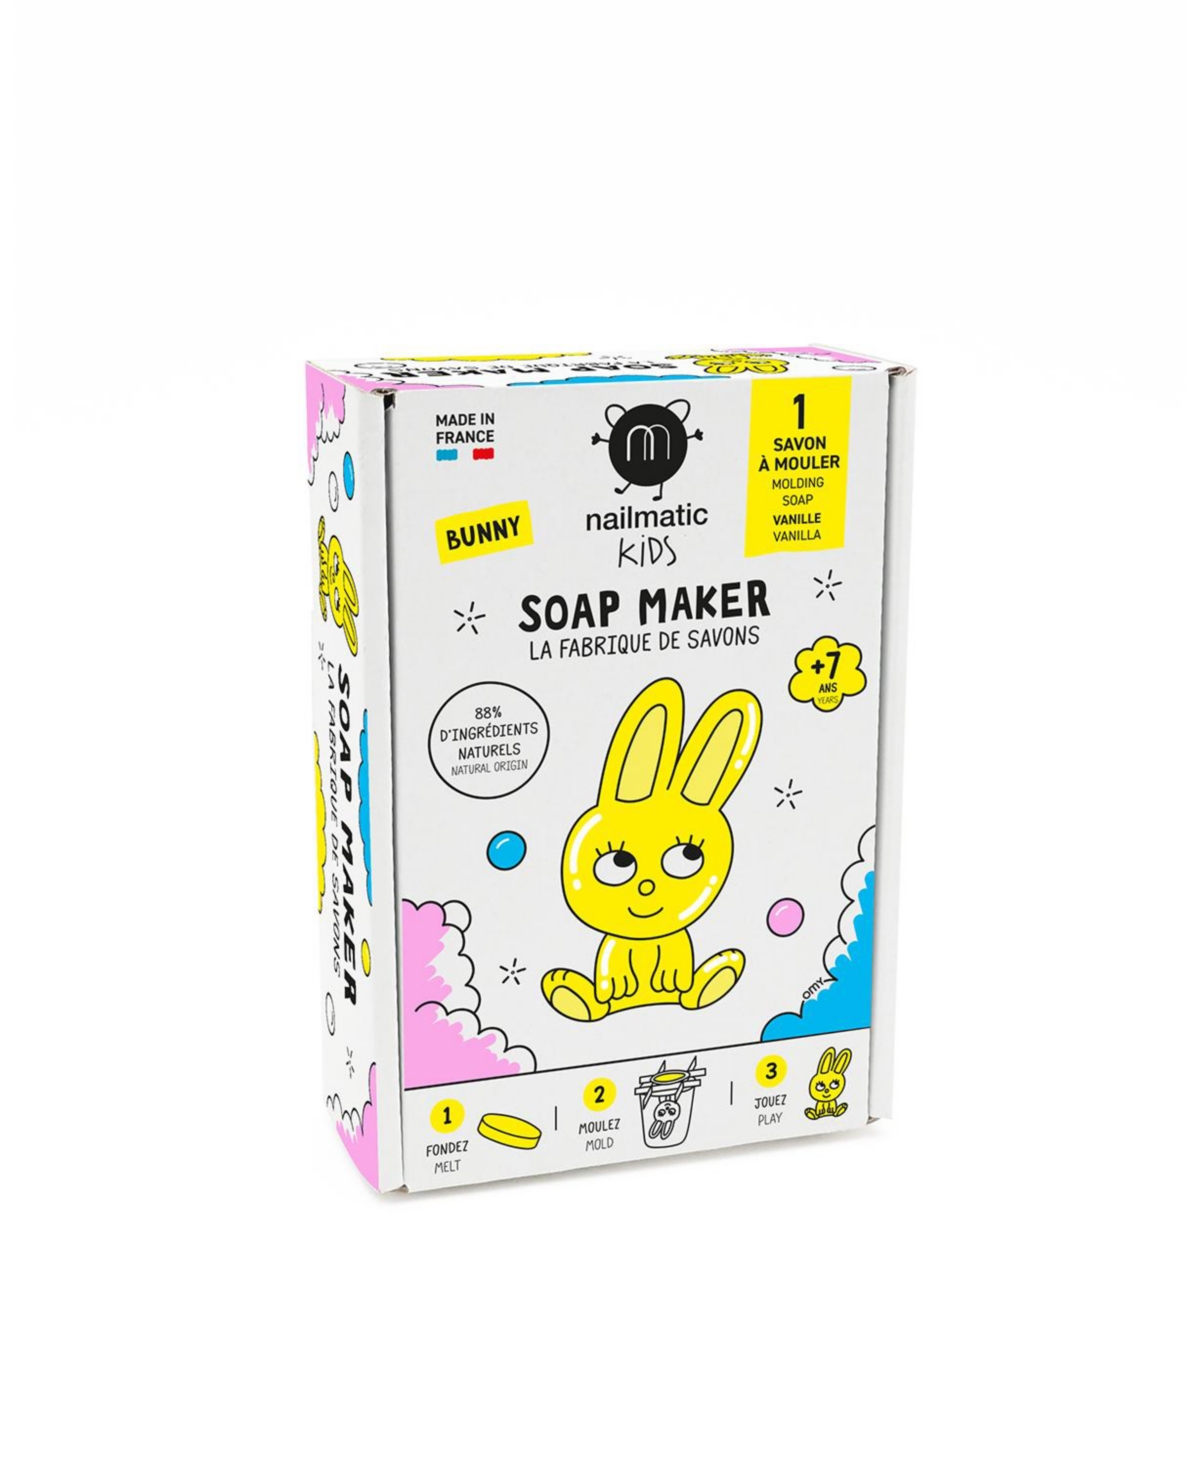 Diy bunny Soap maker - Assorted Pre-Pack